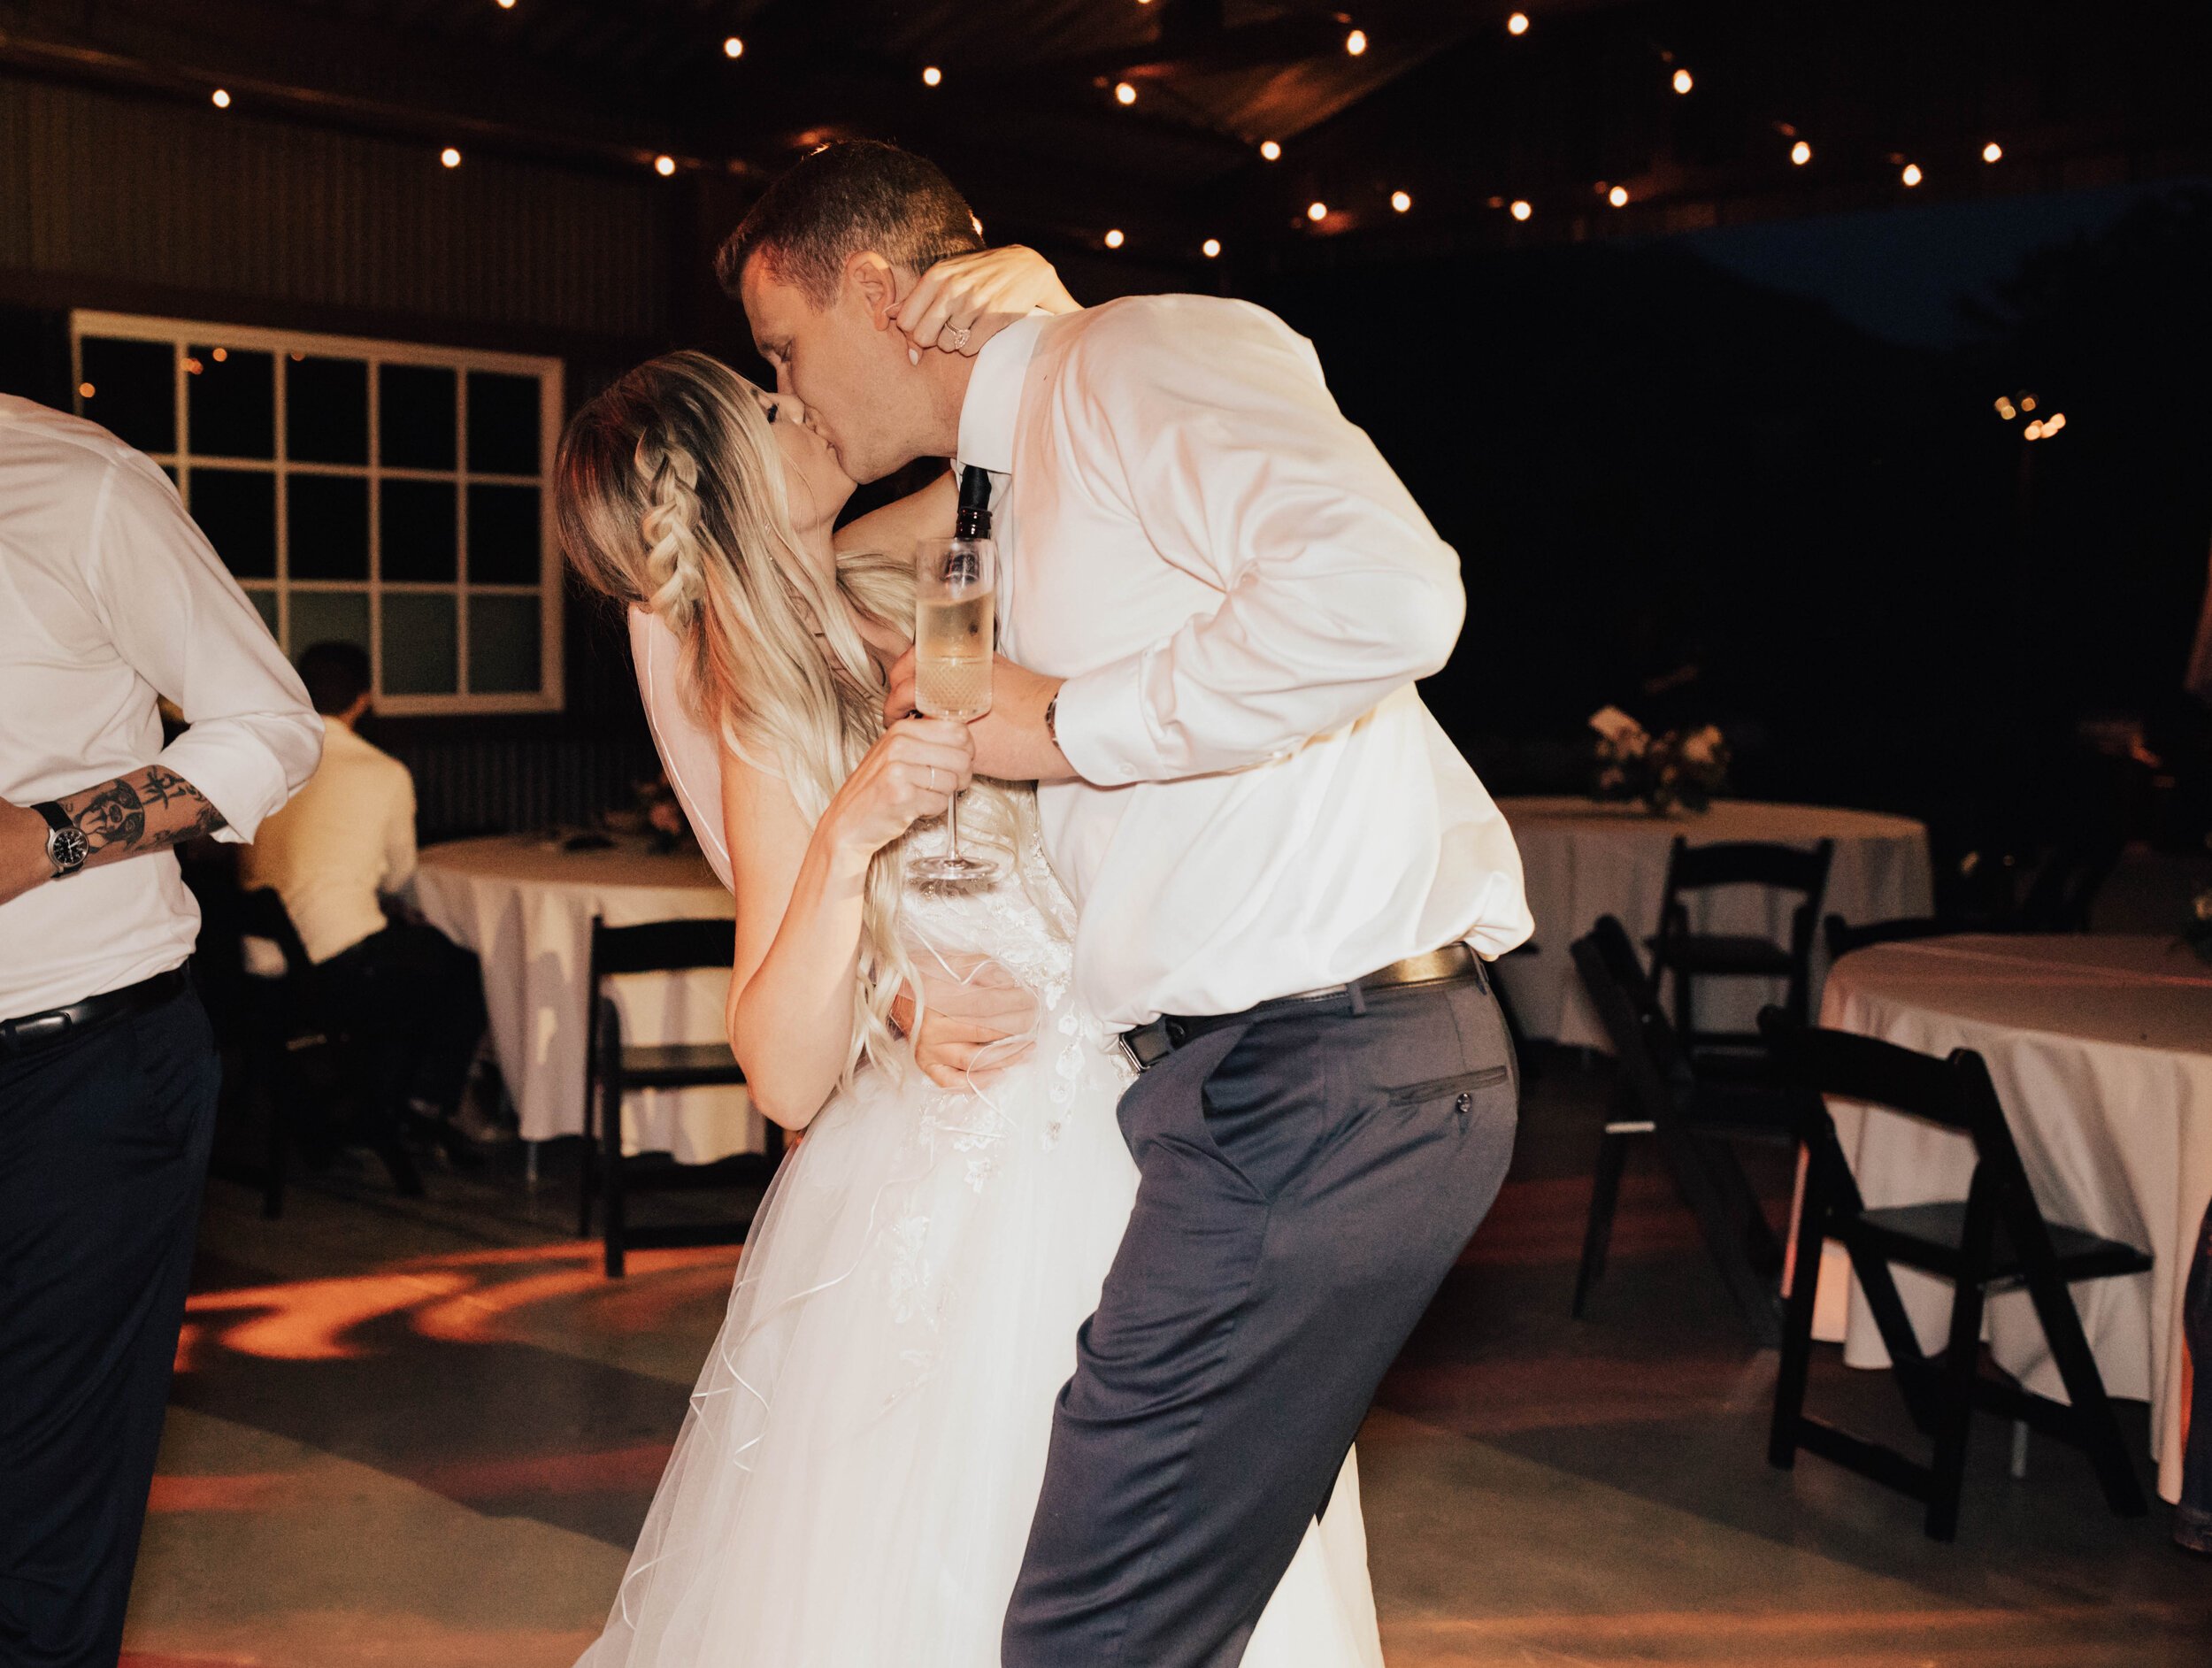 www.santabarbarawedding.com | Bria Peterson | Ocean View Farm | KB Events | Tangled Lotus  | SPARK Creative Events | Elite Disc Jockeys | Bride and Groom Share a Kiss on the Dance Floor